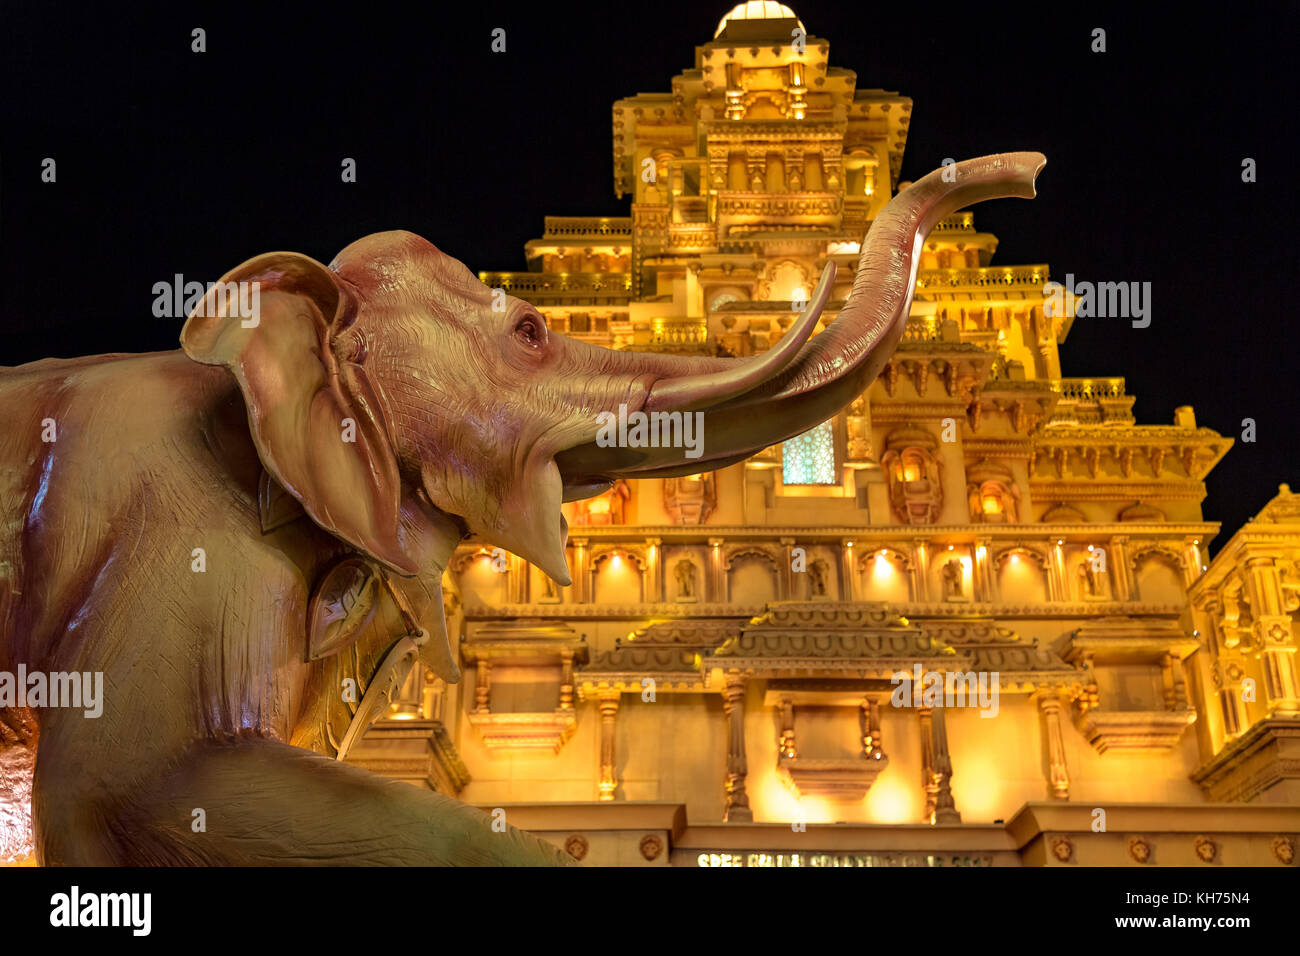 Creative durga tempio costruito per replicare un indiano Royal Palace a Durga puja in nord kolkata Foto Stock